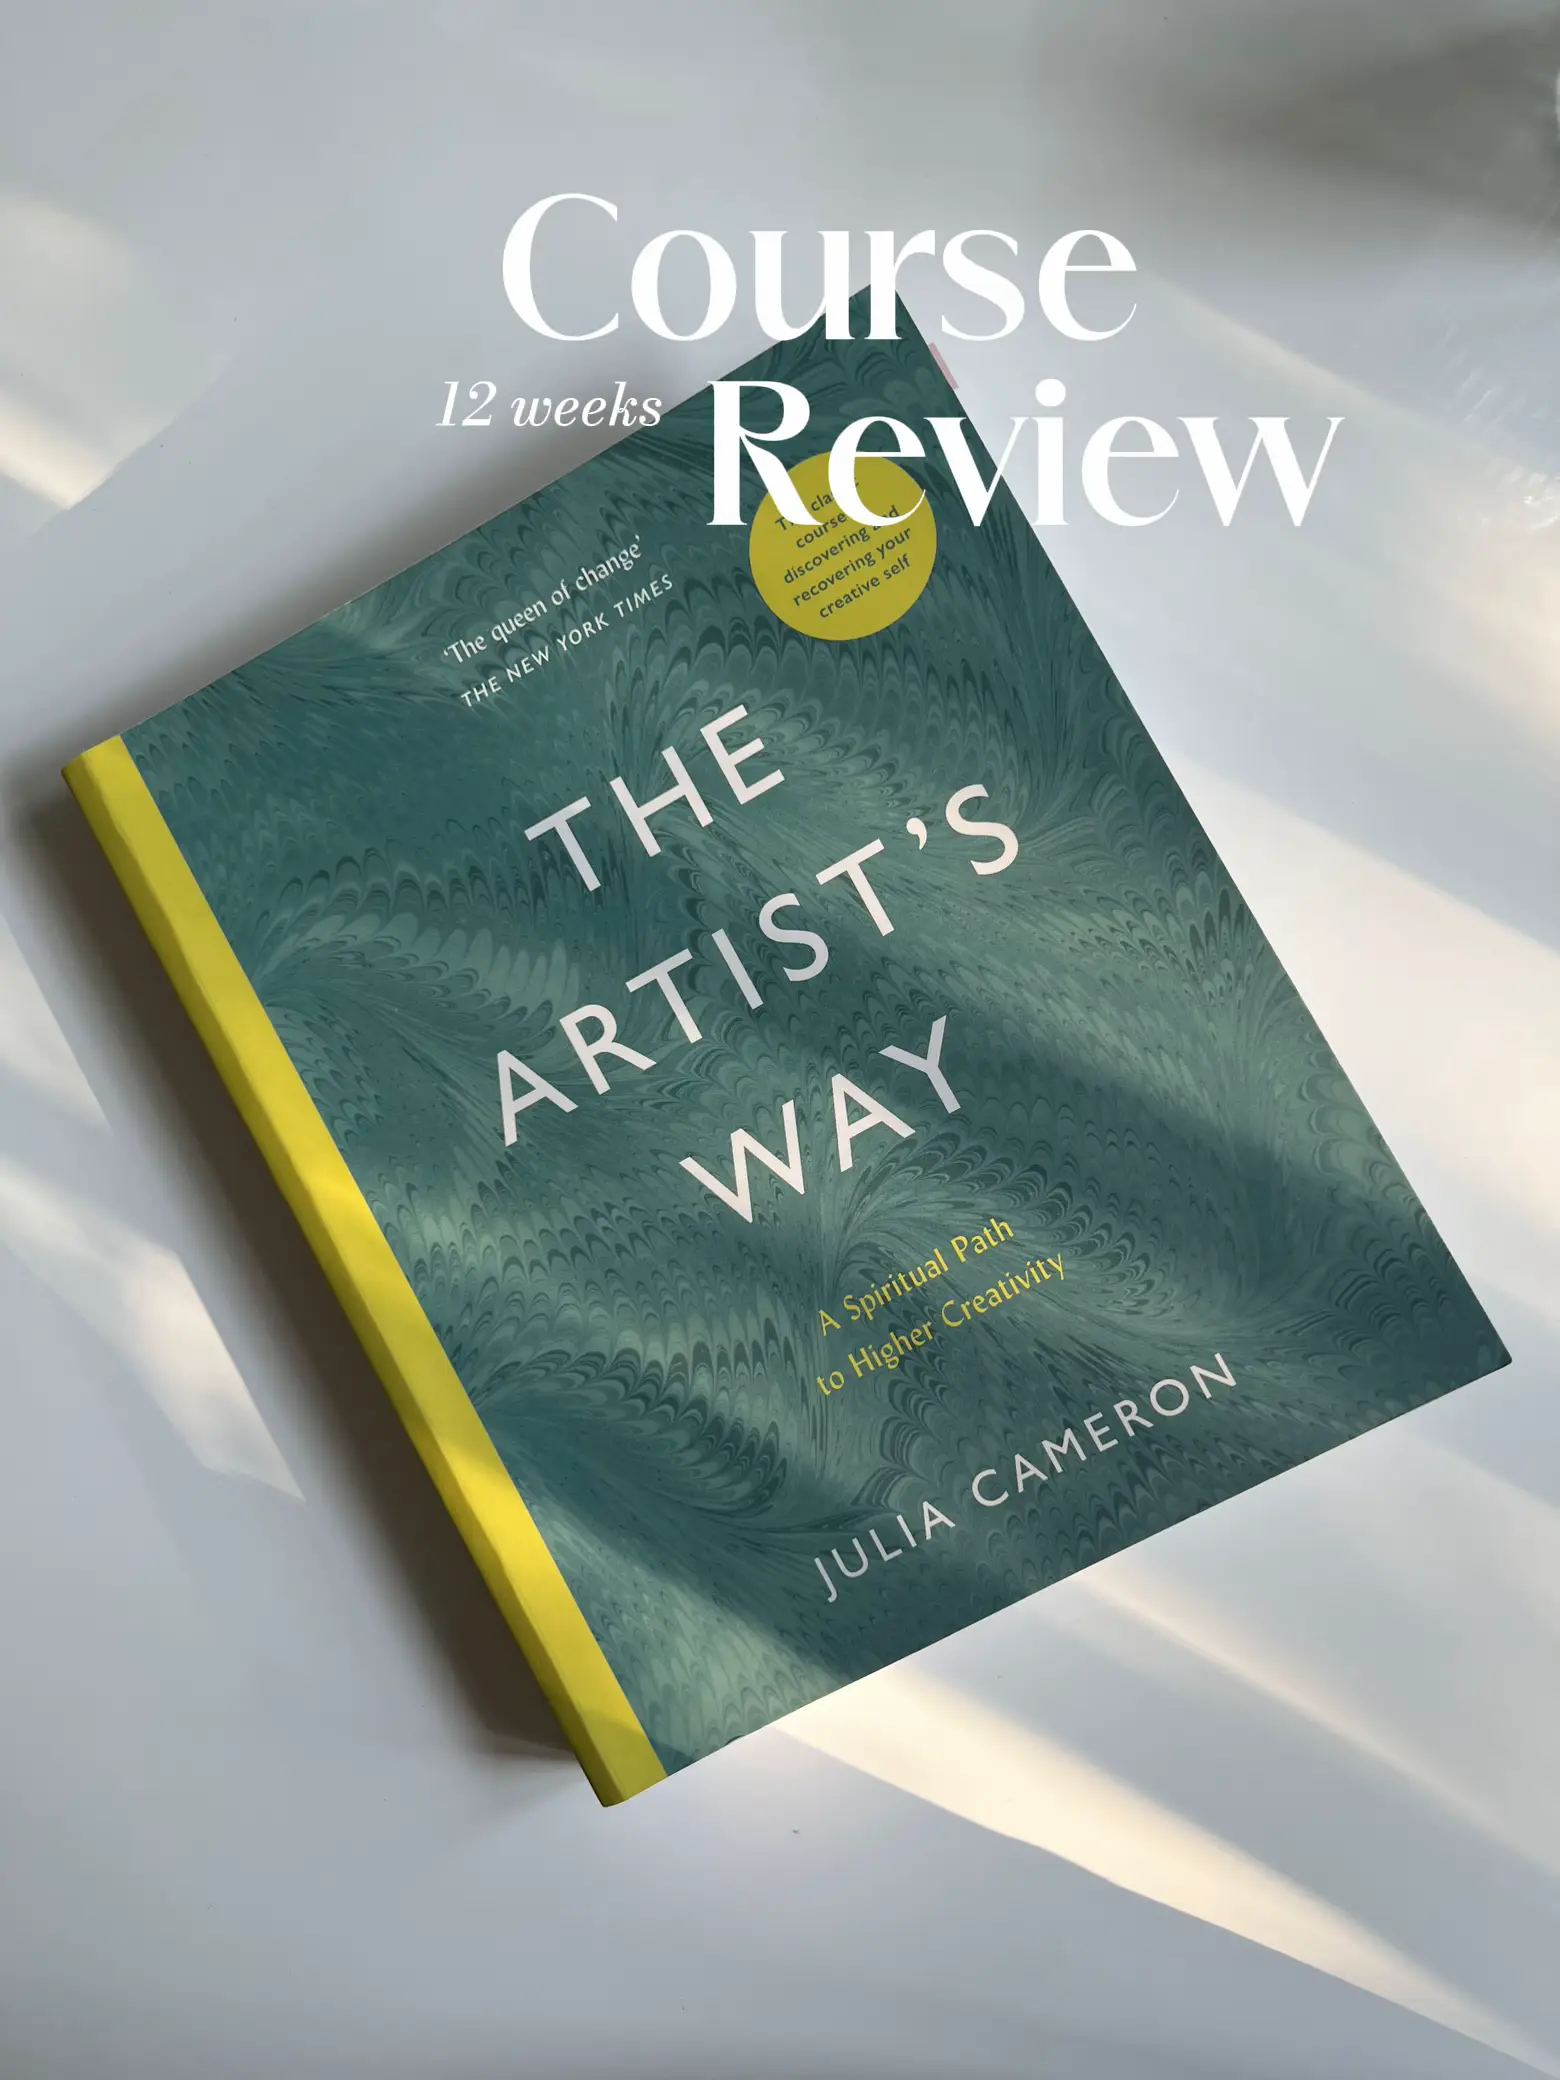 The Artist's Way: A Spiritual Path to Higher Creativity: Cameron